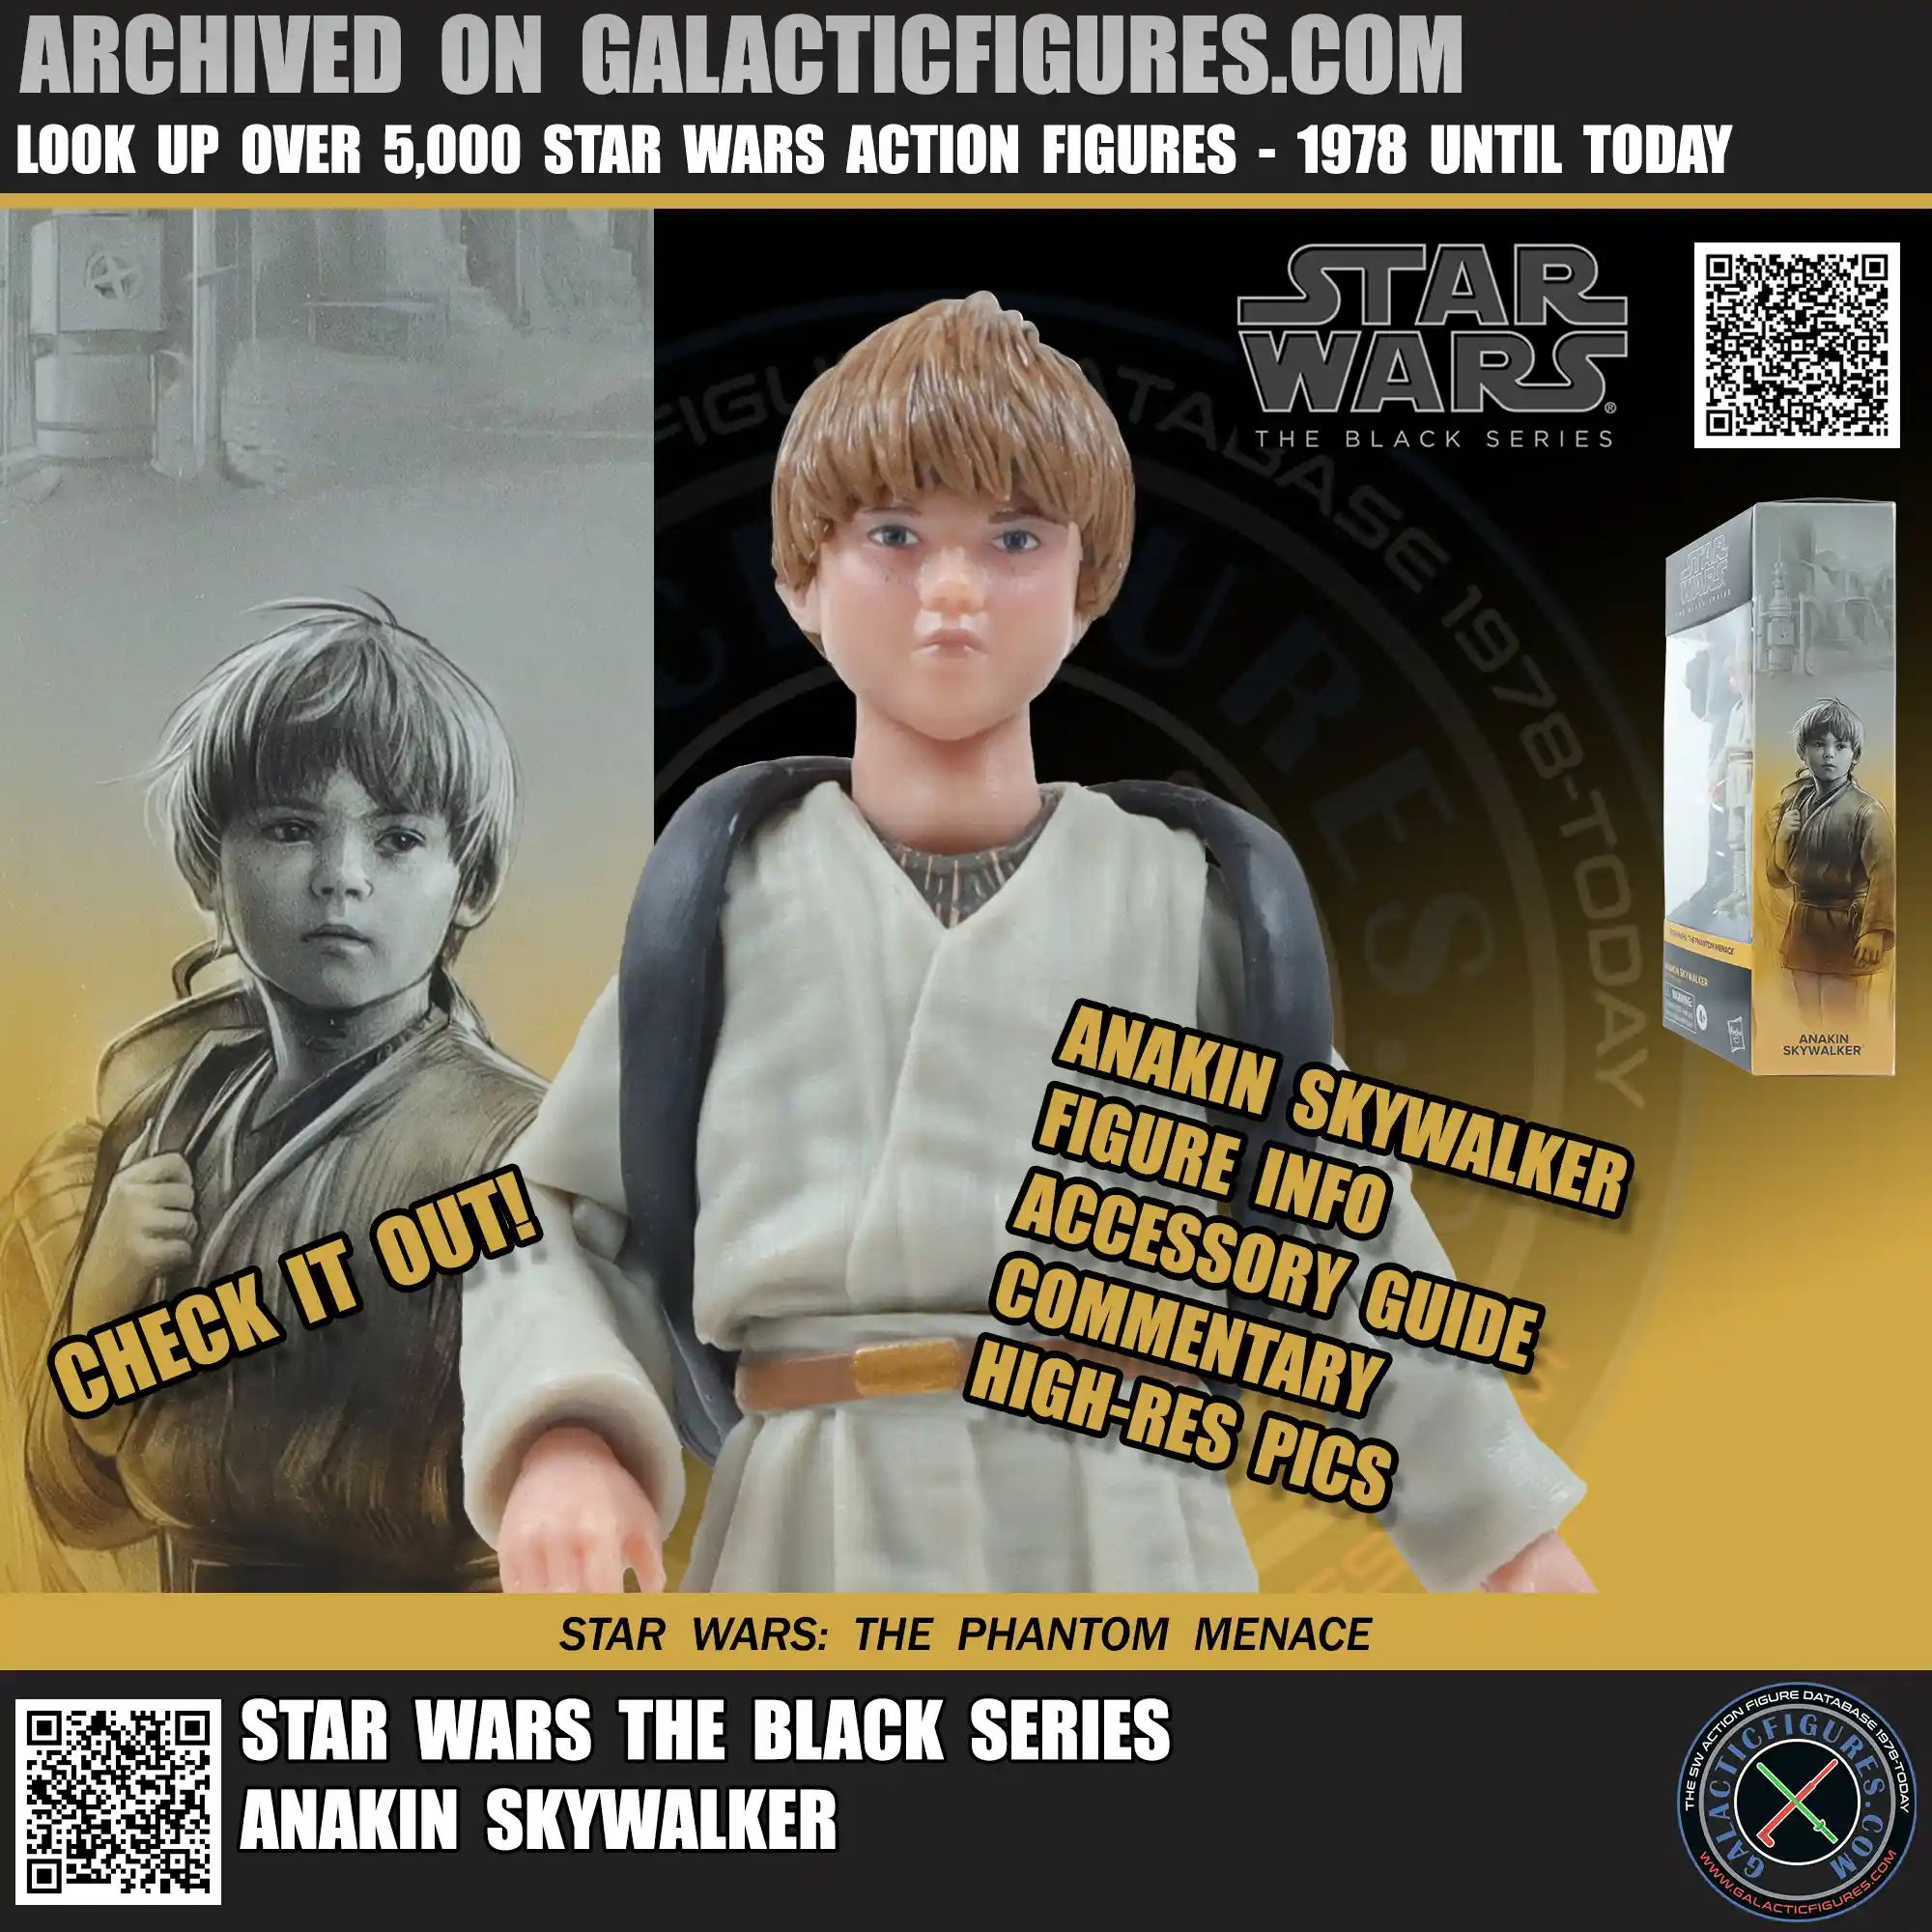 Black Series Anakin Skywalker Archived